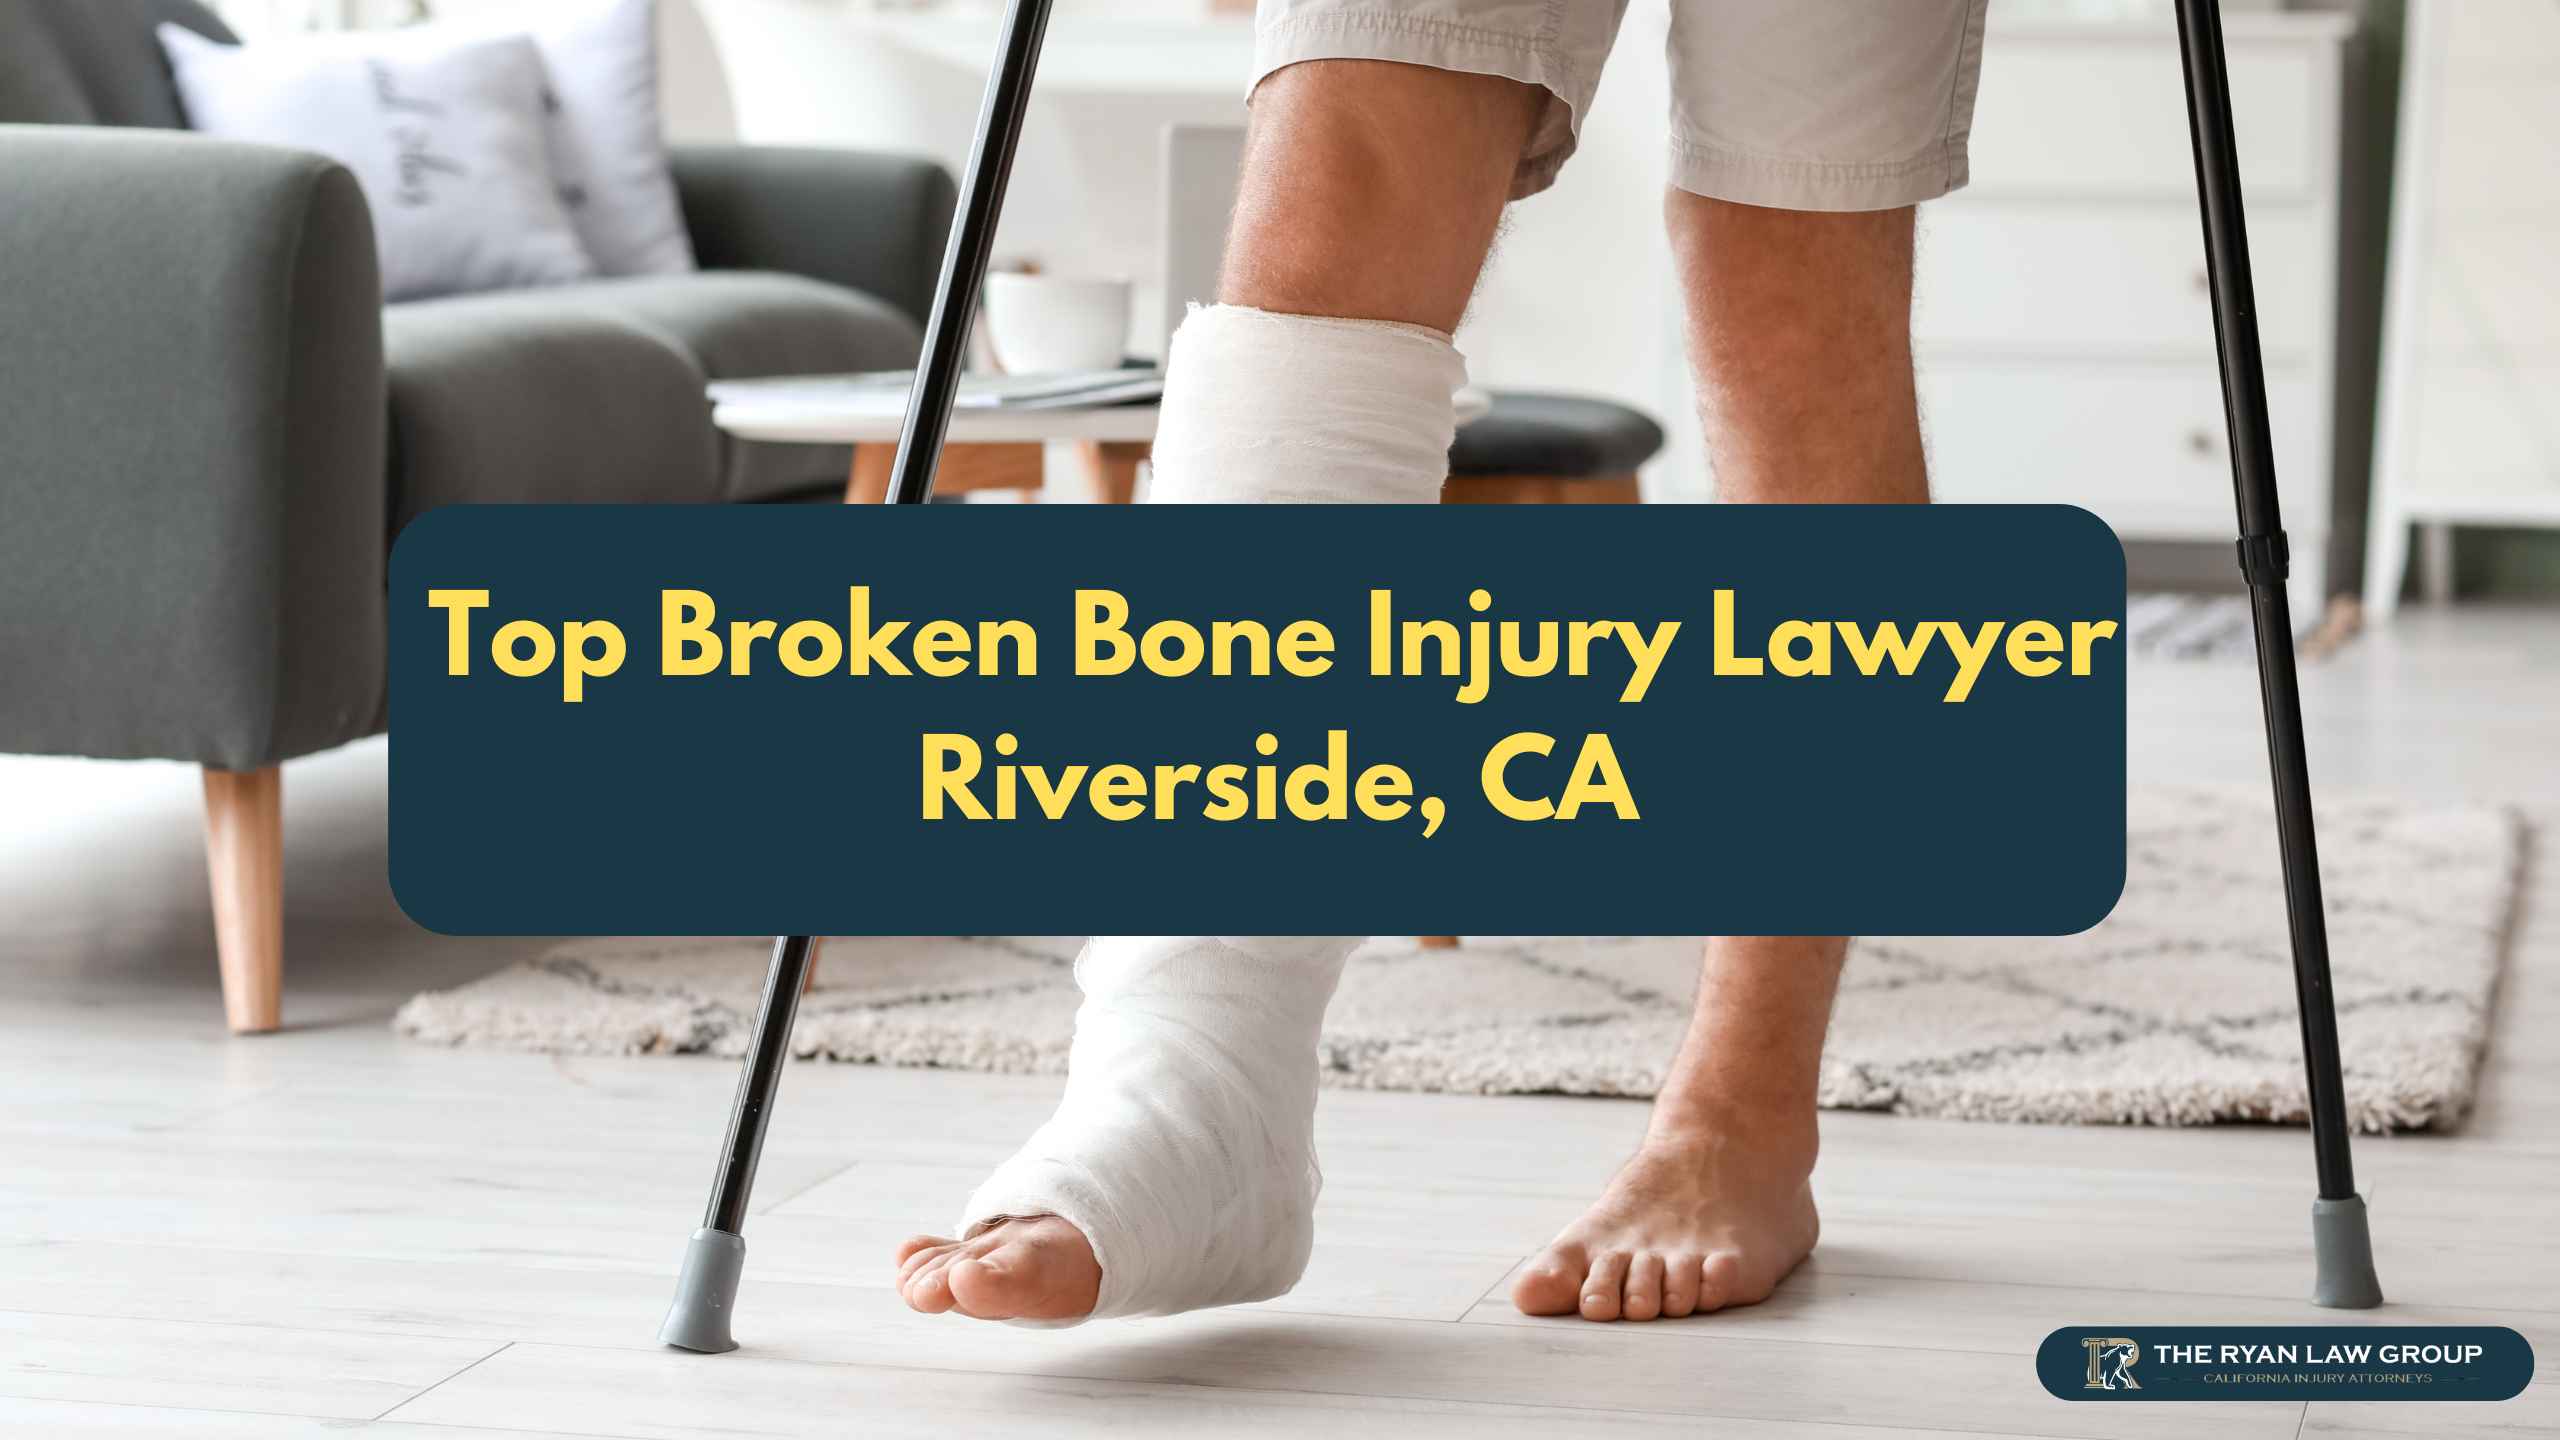 Top Broken Bone Injury Lawyer